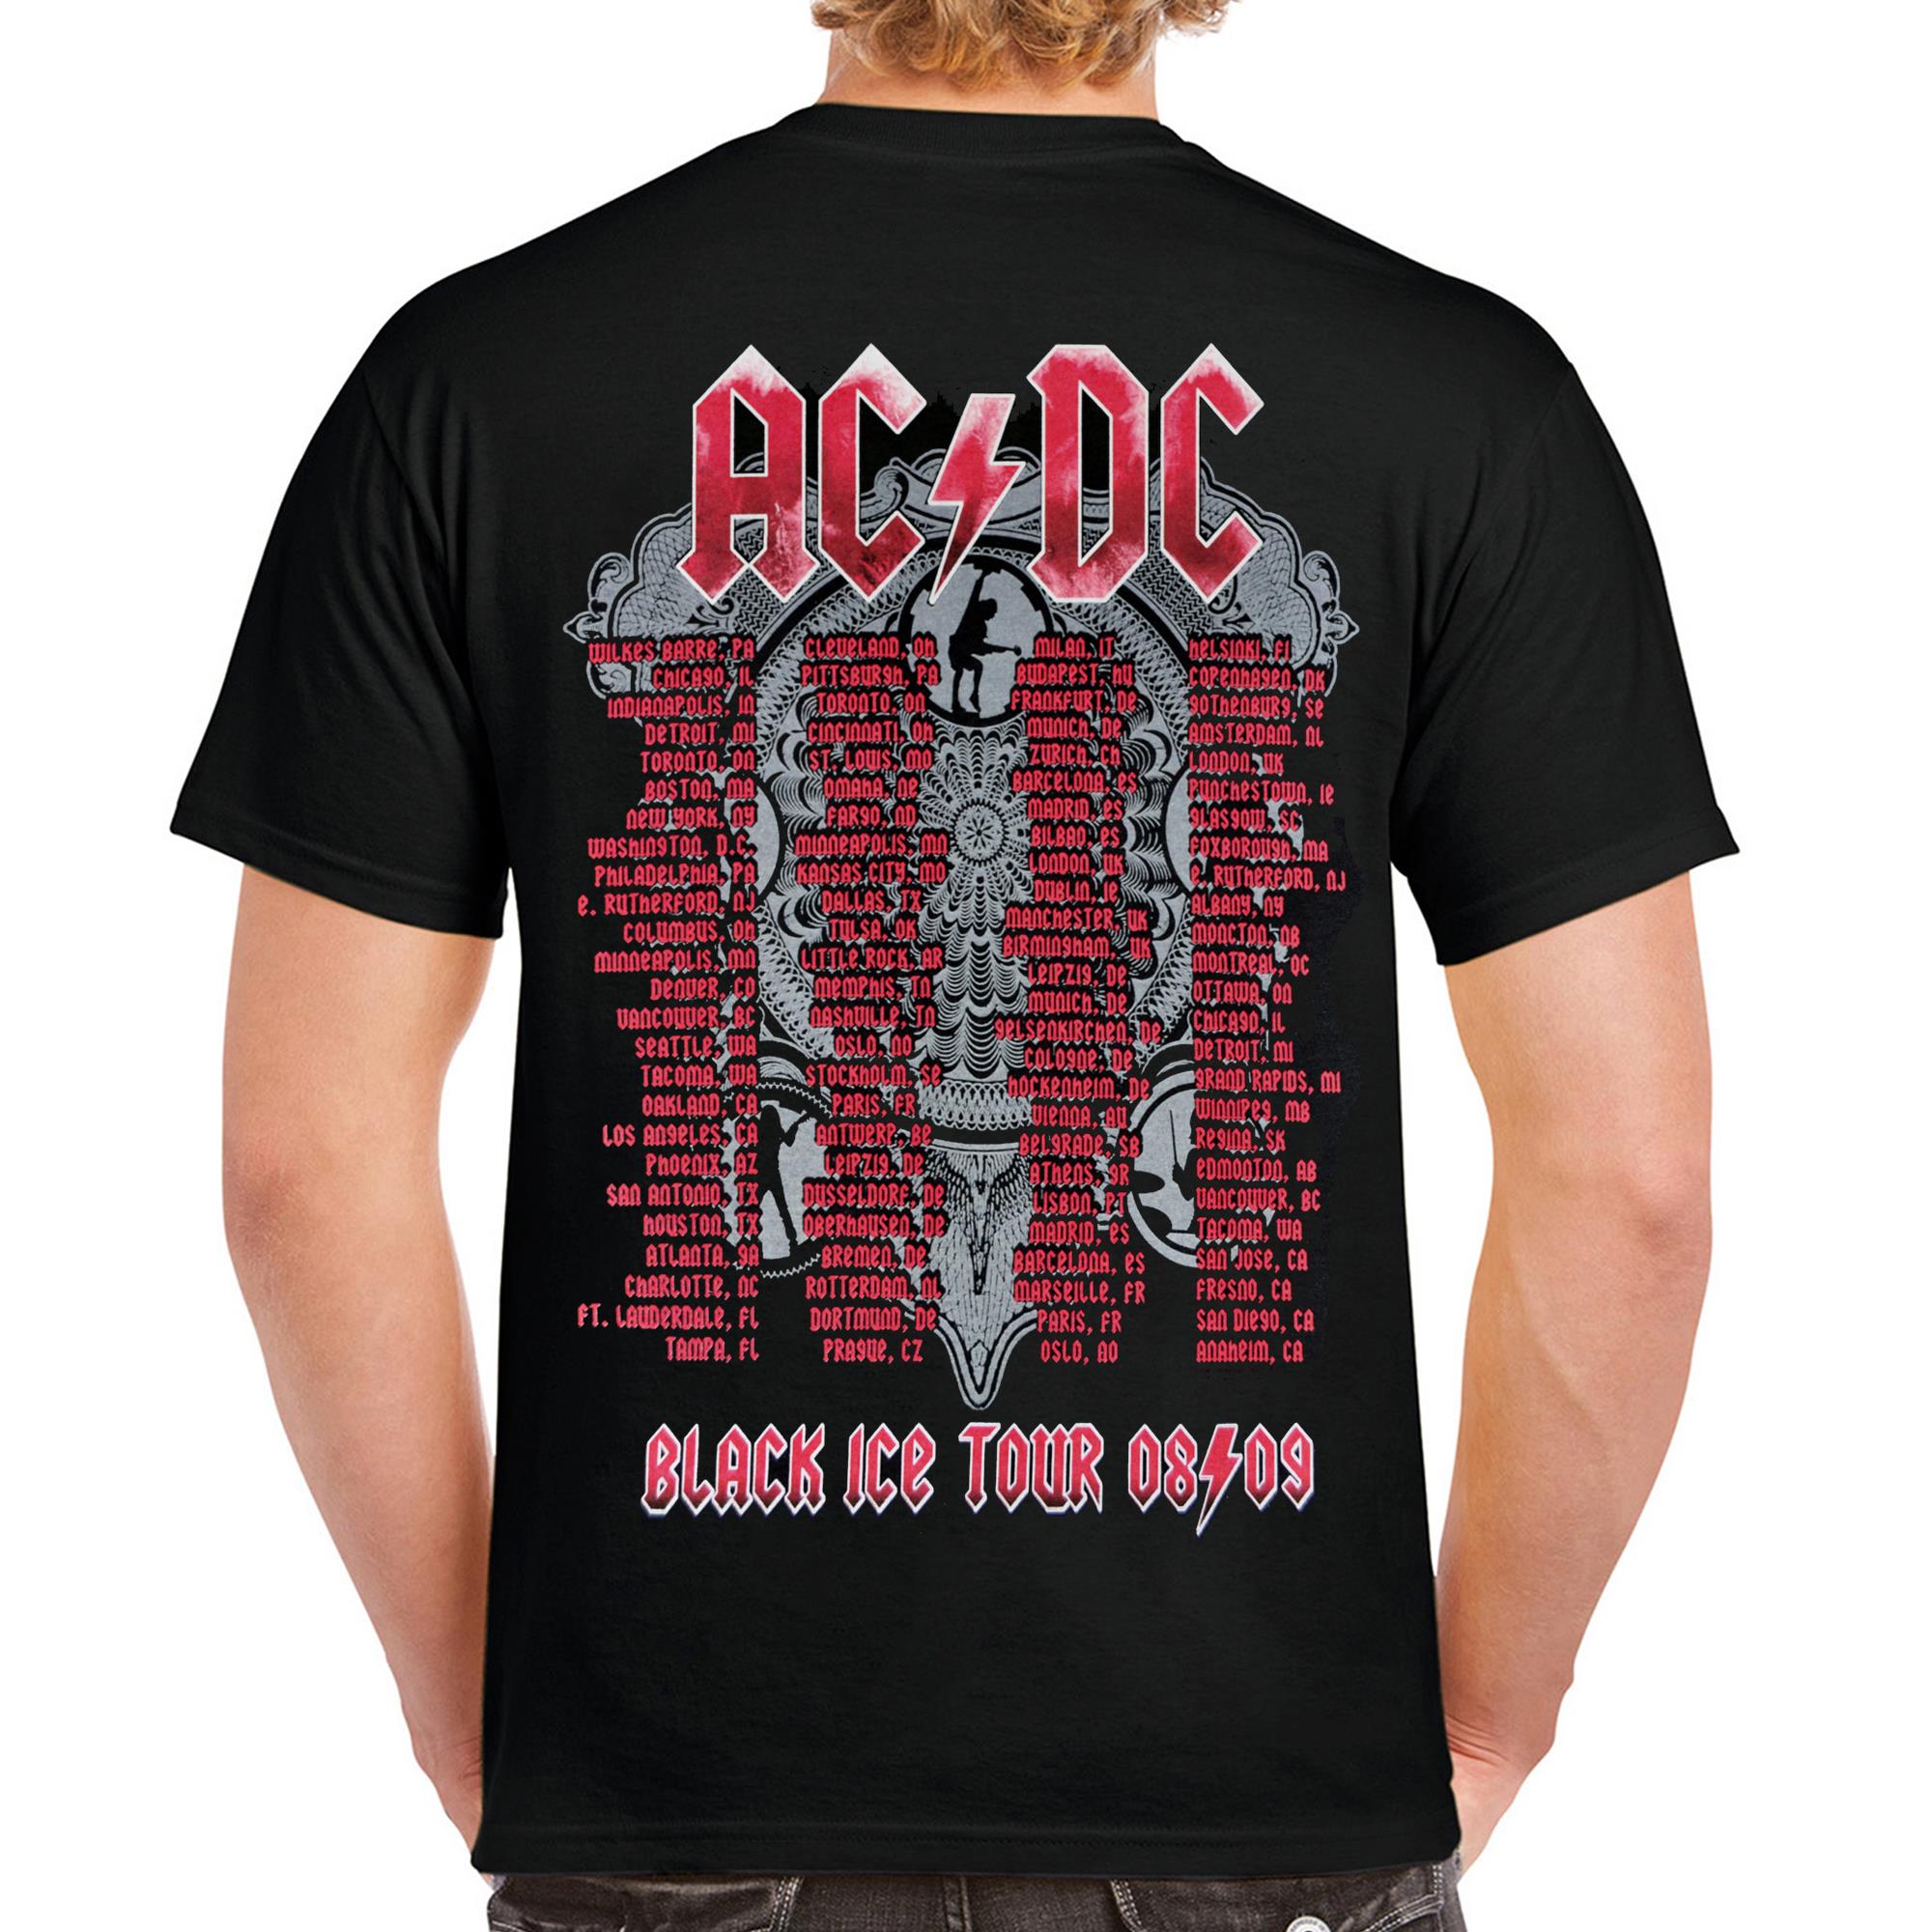 Black Ice Cover Tour dates T-Shirt